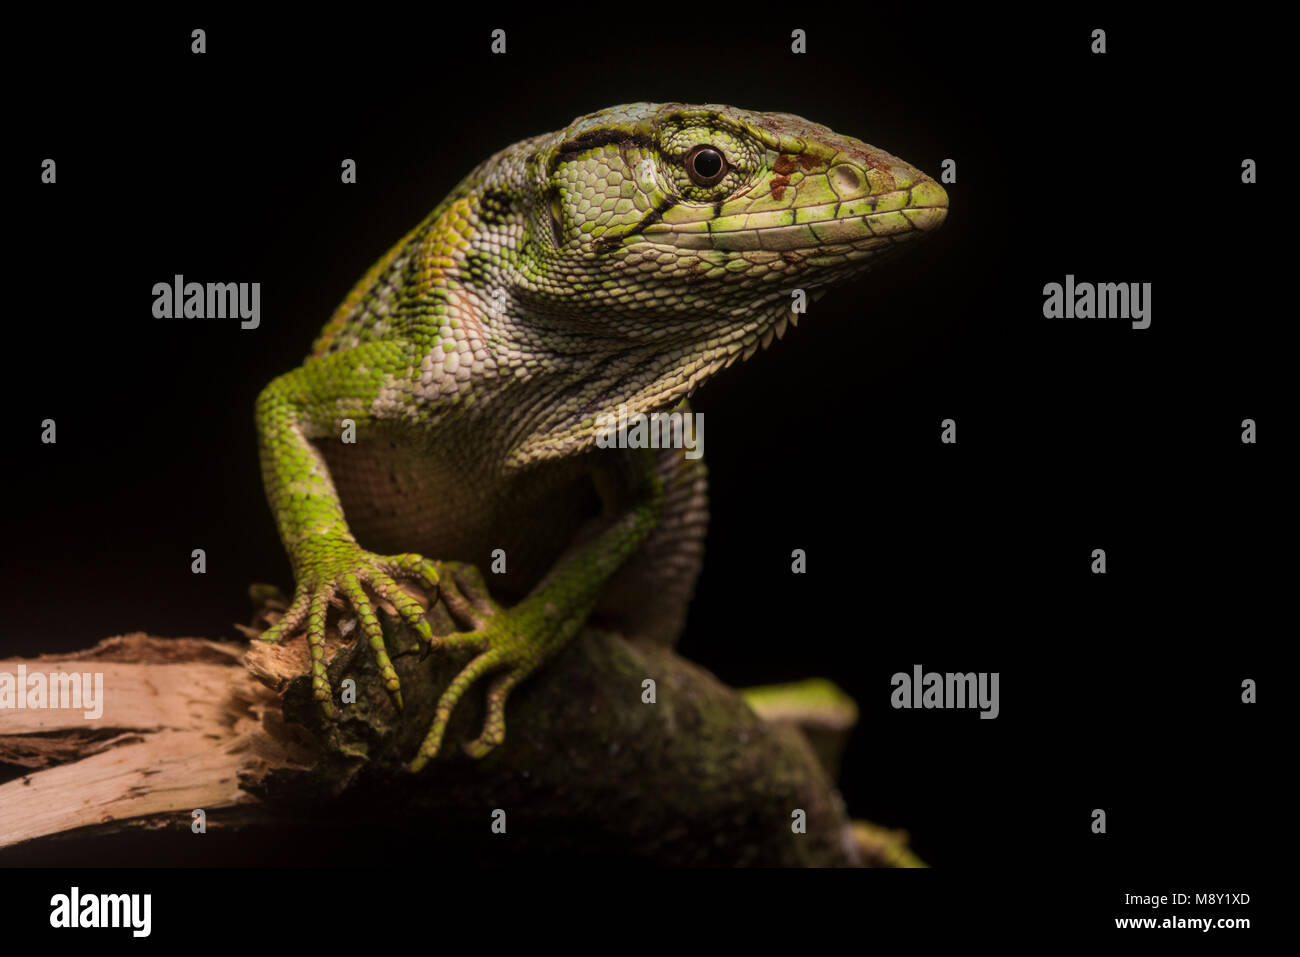 The common monkey lizard (Polychrus marmoratus) from the Peruvian jungle. Stock Photo